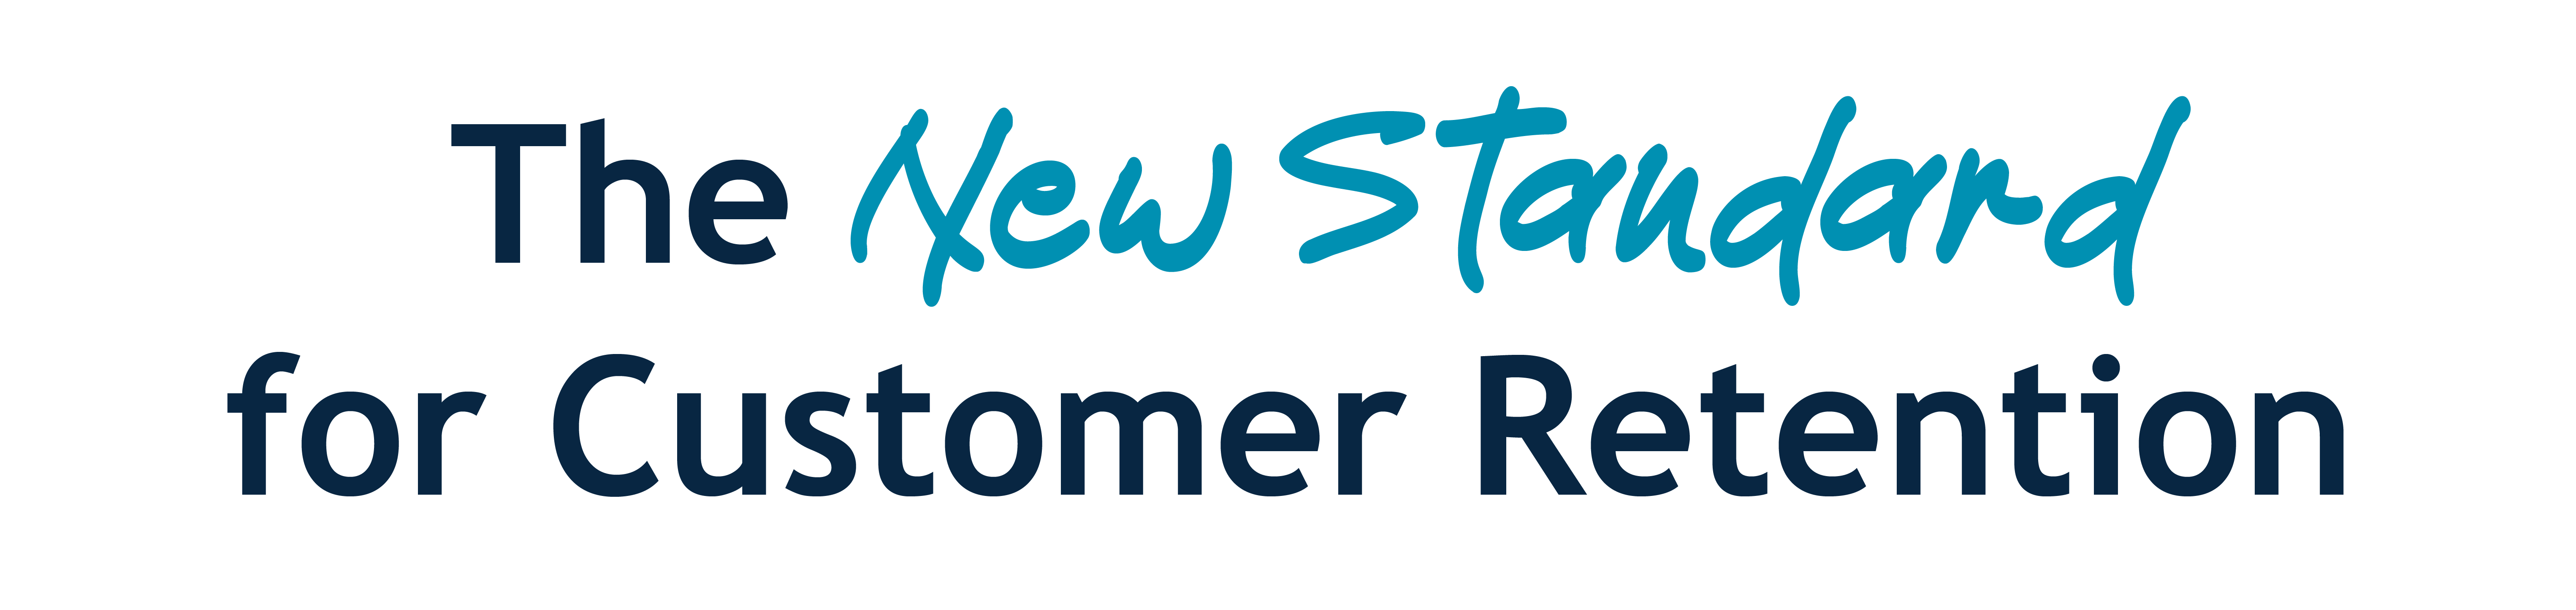 The New Standard For Customer Retention